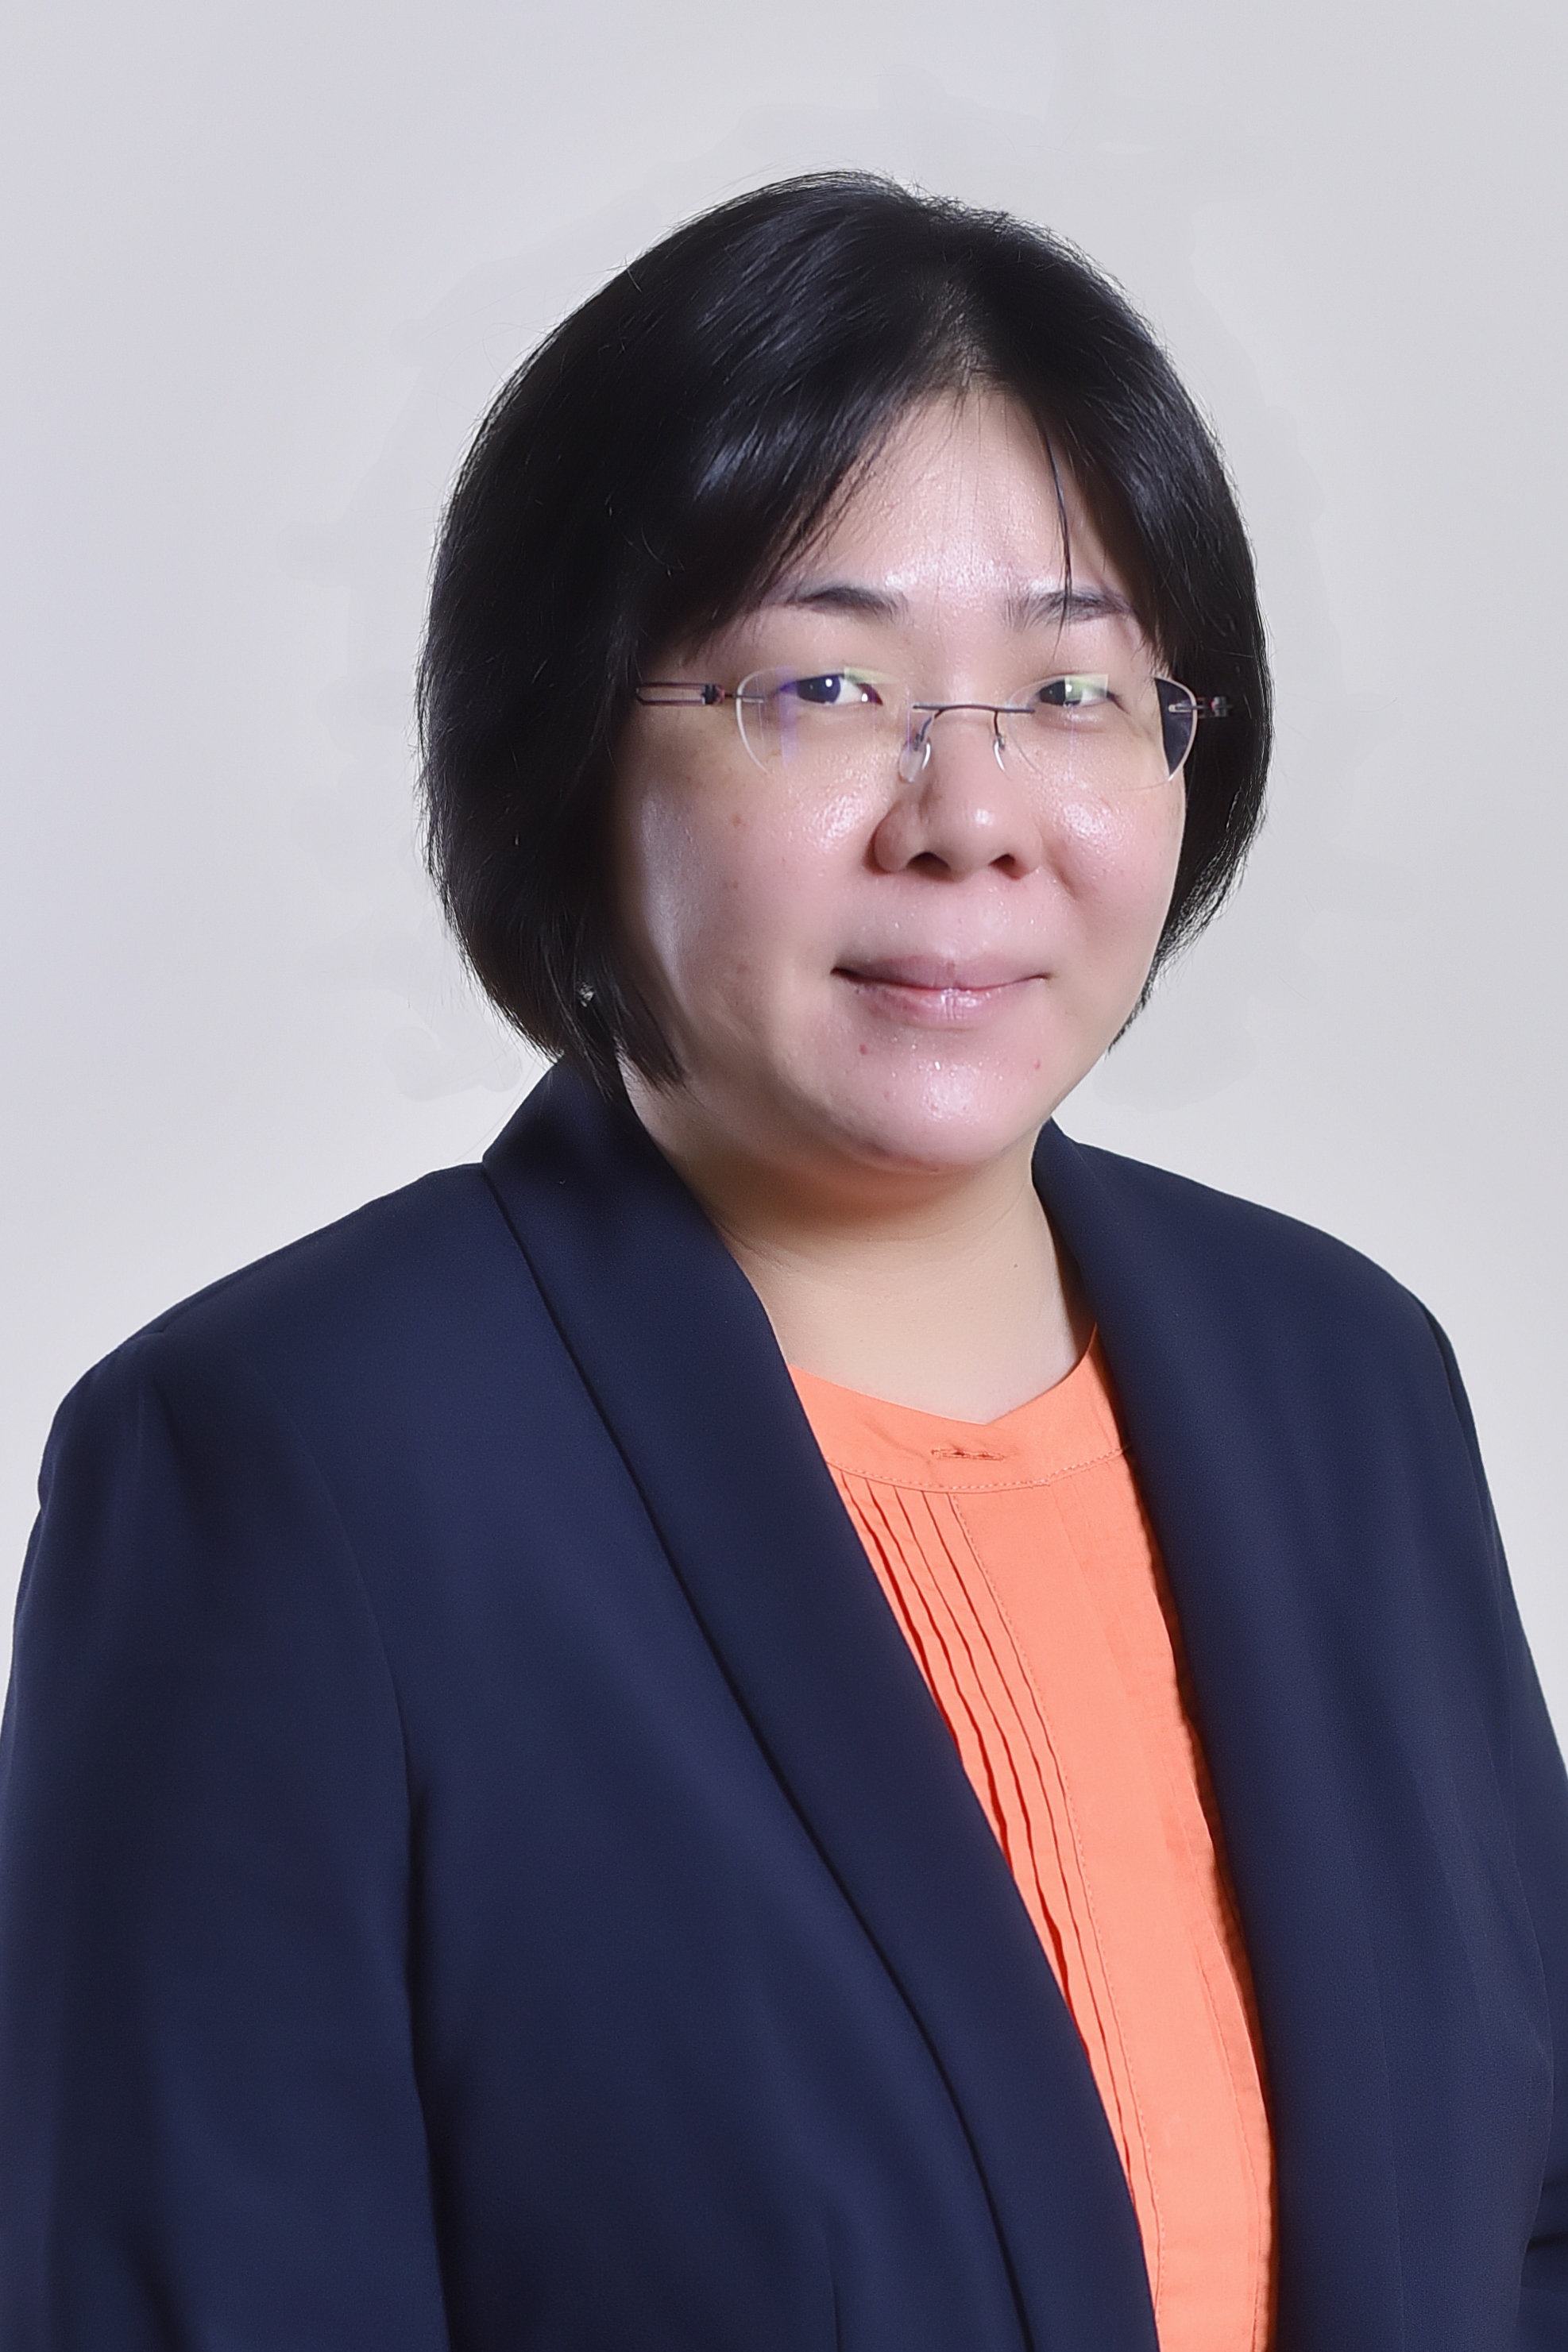 Dr Teoh Ying Jia